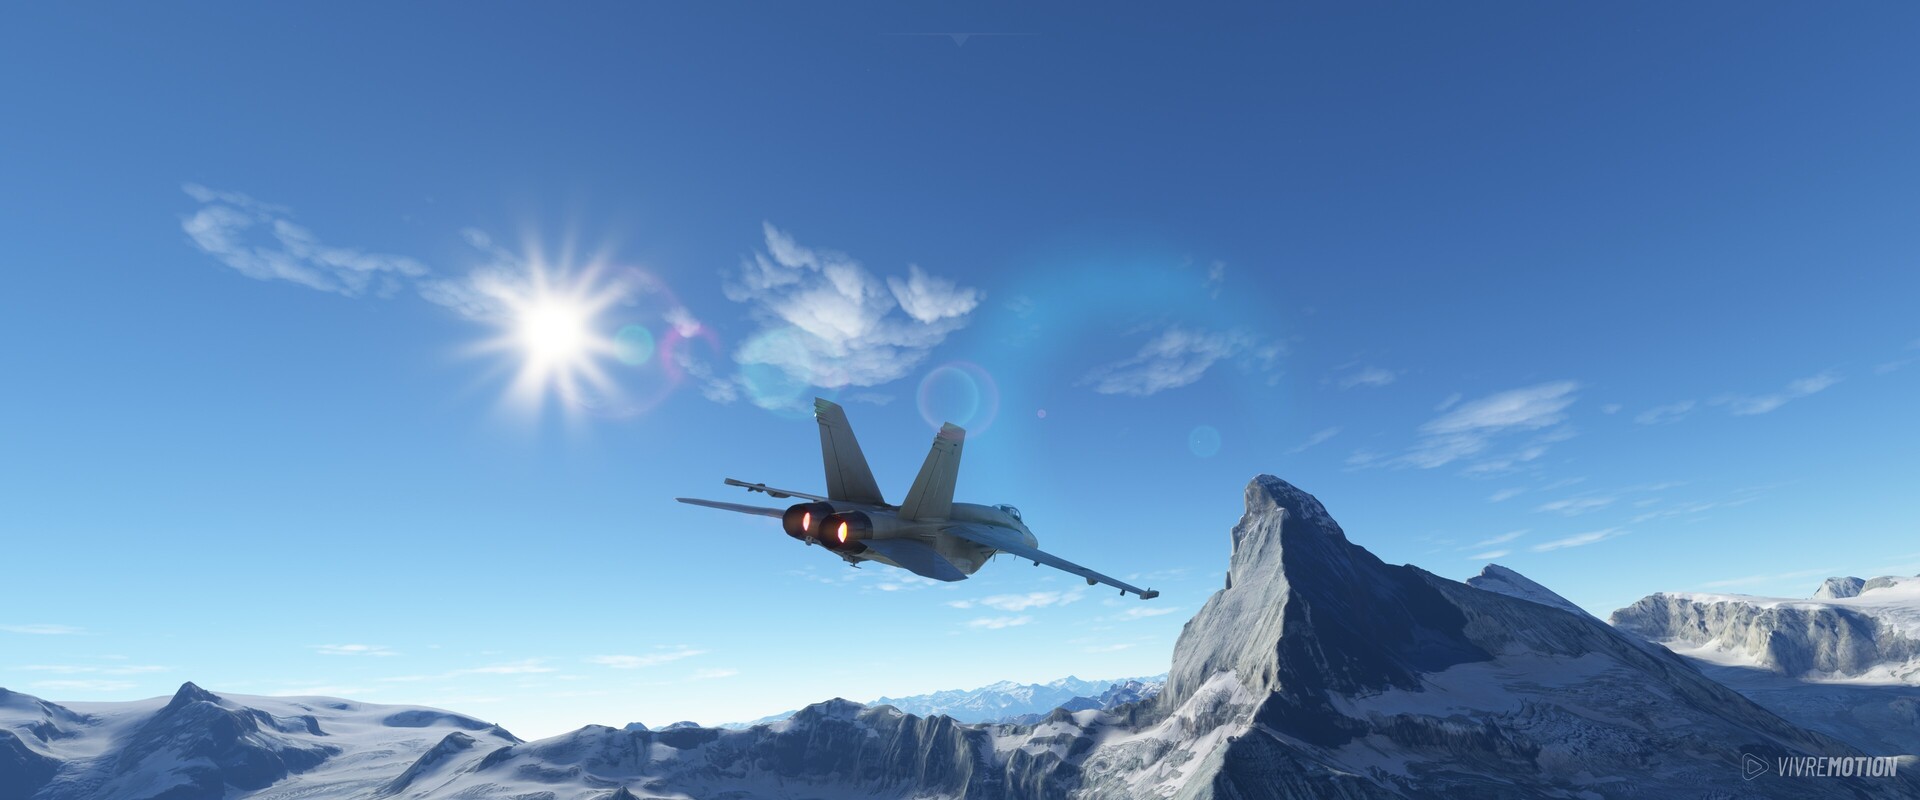 Zermatt-Matterhorn, Switzerland - Boeing F/A-18 Super Hornet - Microsoft Flight Simulator - VIVRE-MOTION